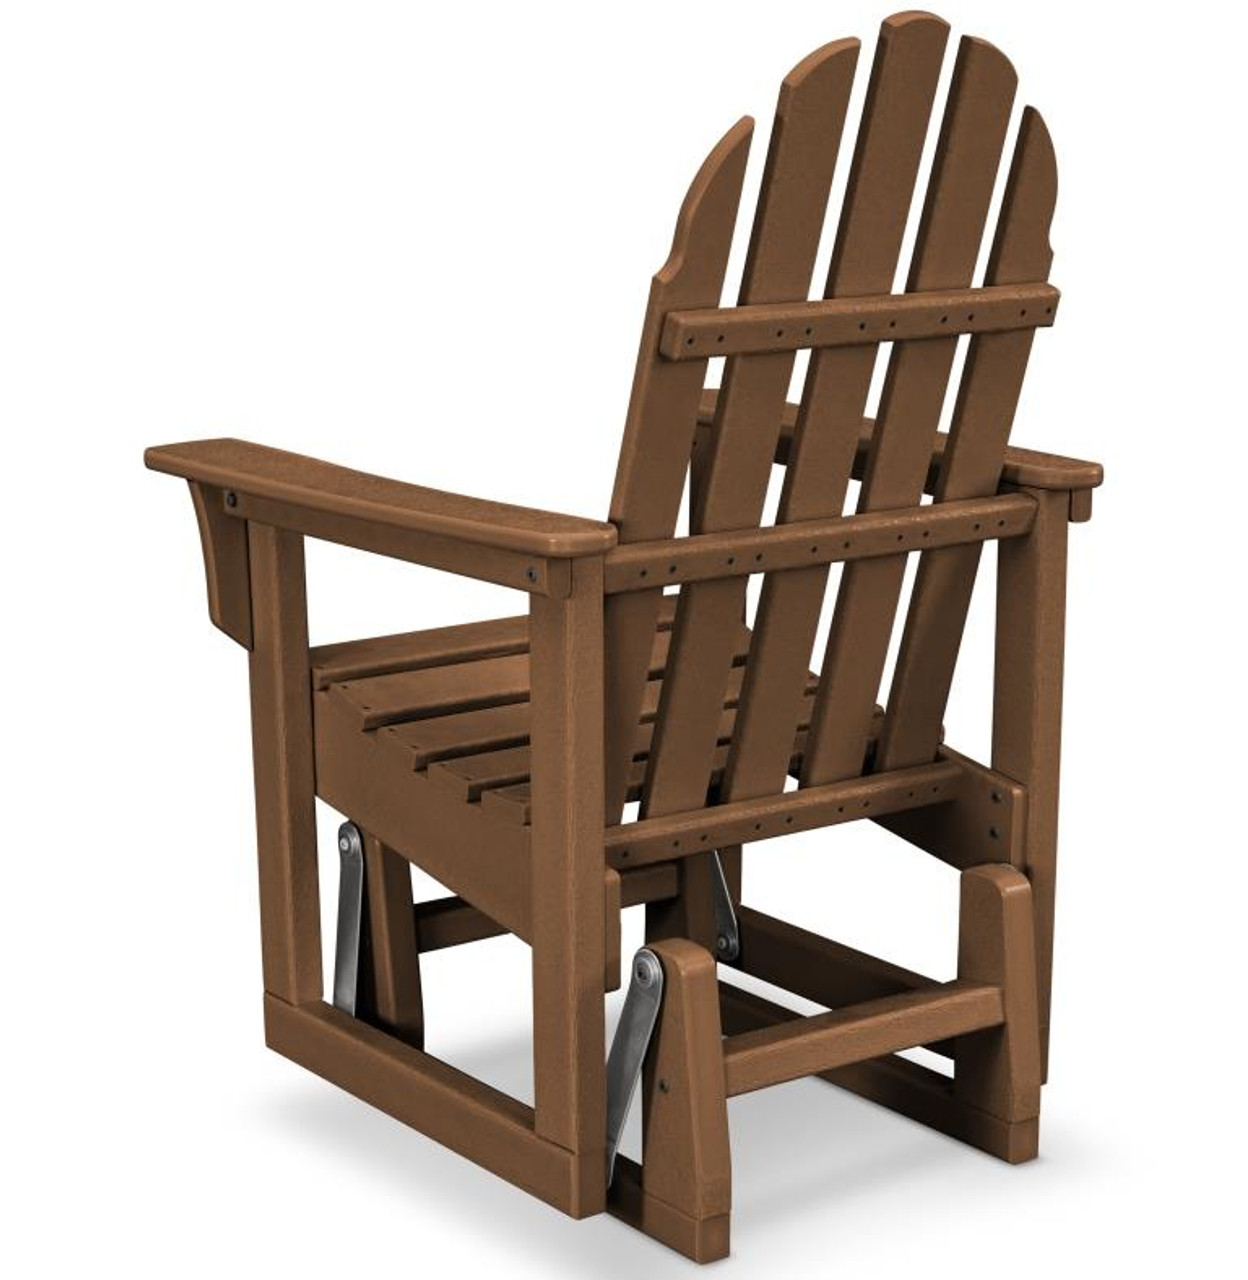 Trex Cape Cod Adirondack Chair Glider 34  24877.1646939642 ?c=1